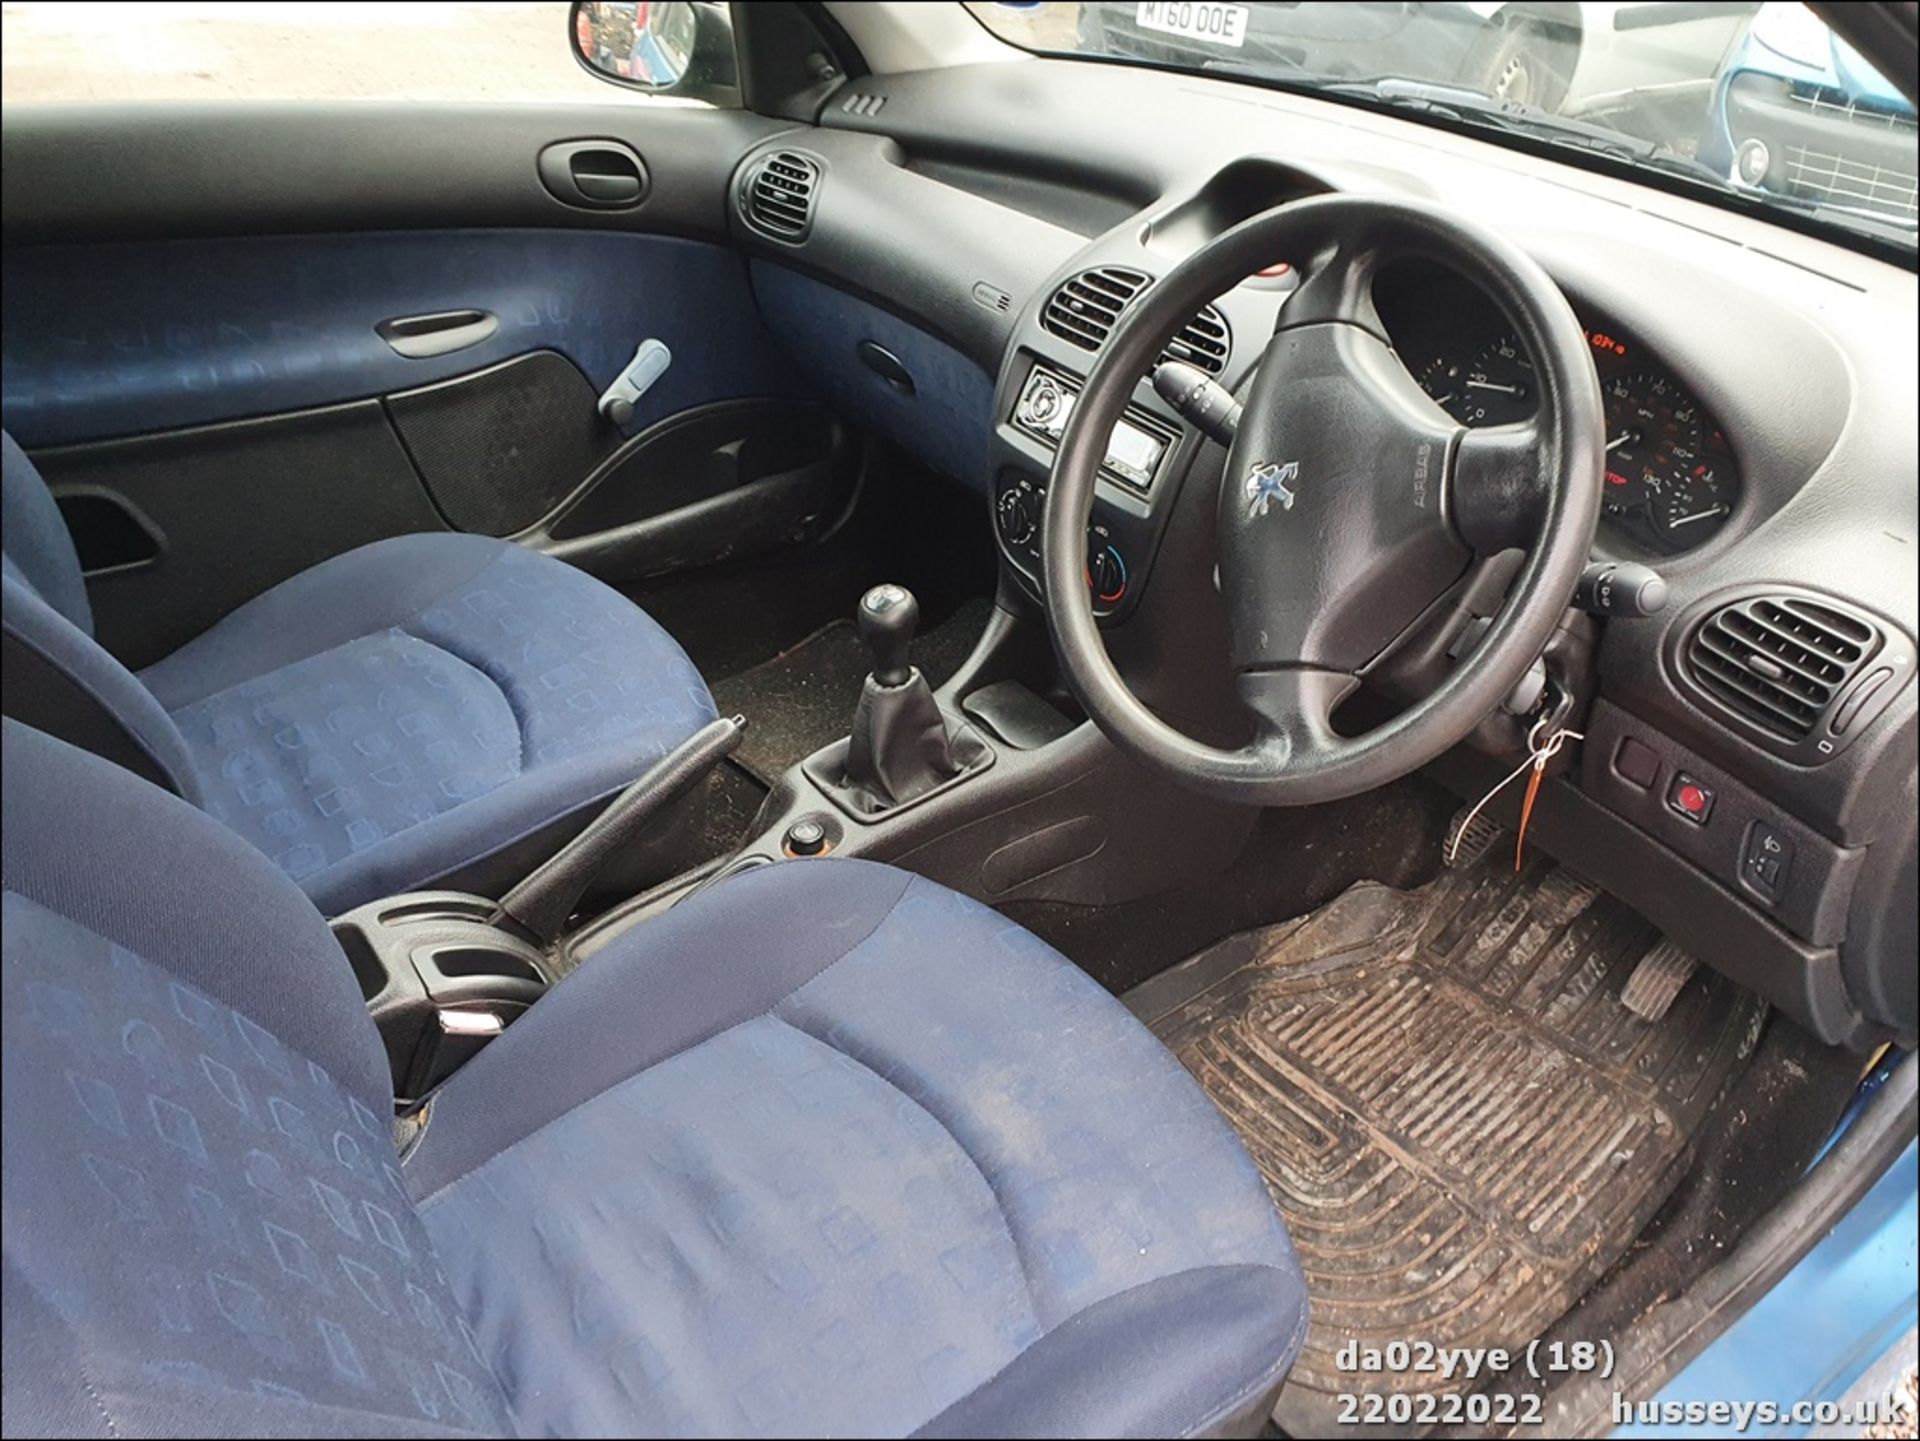 02/02 PEUGEOT 206 STYLE HDI - 1398cc 3dr Hatchback (Blue, 103k) - Image 18 of 38